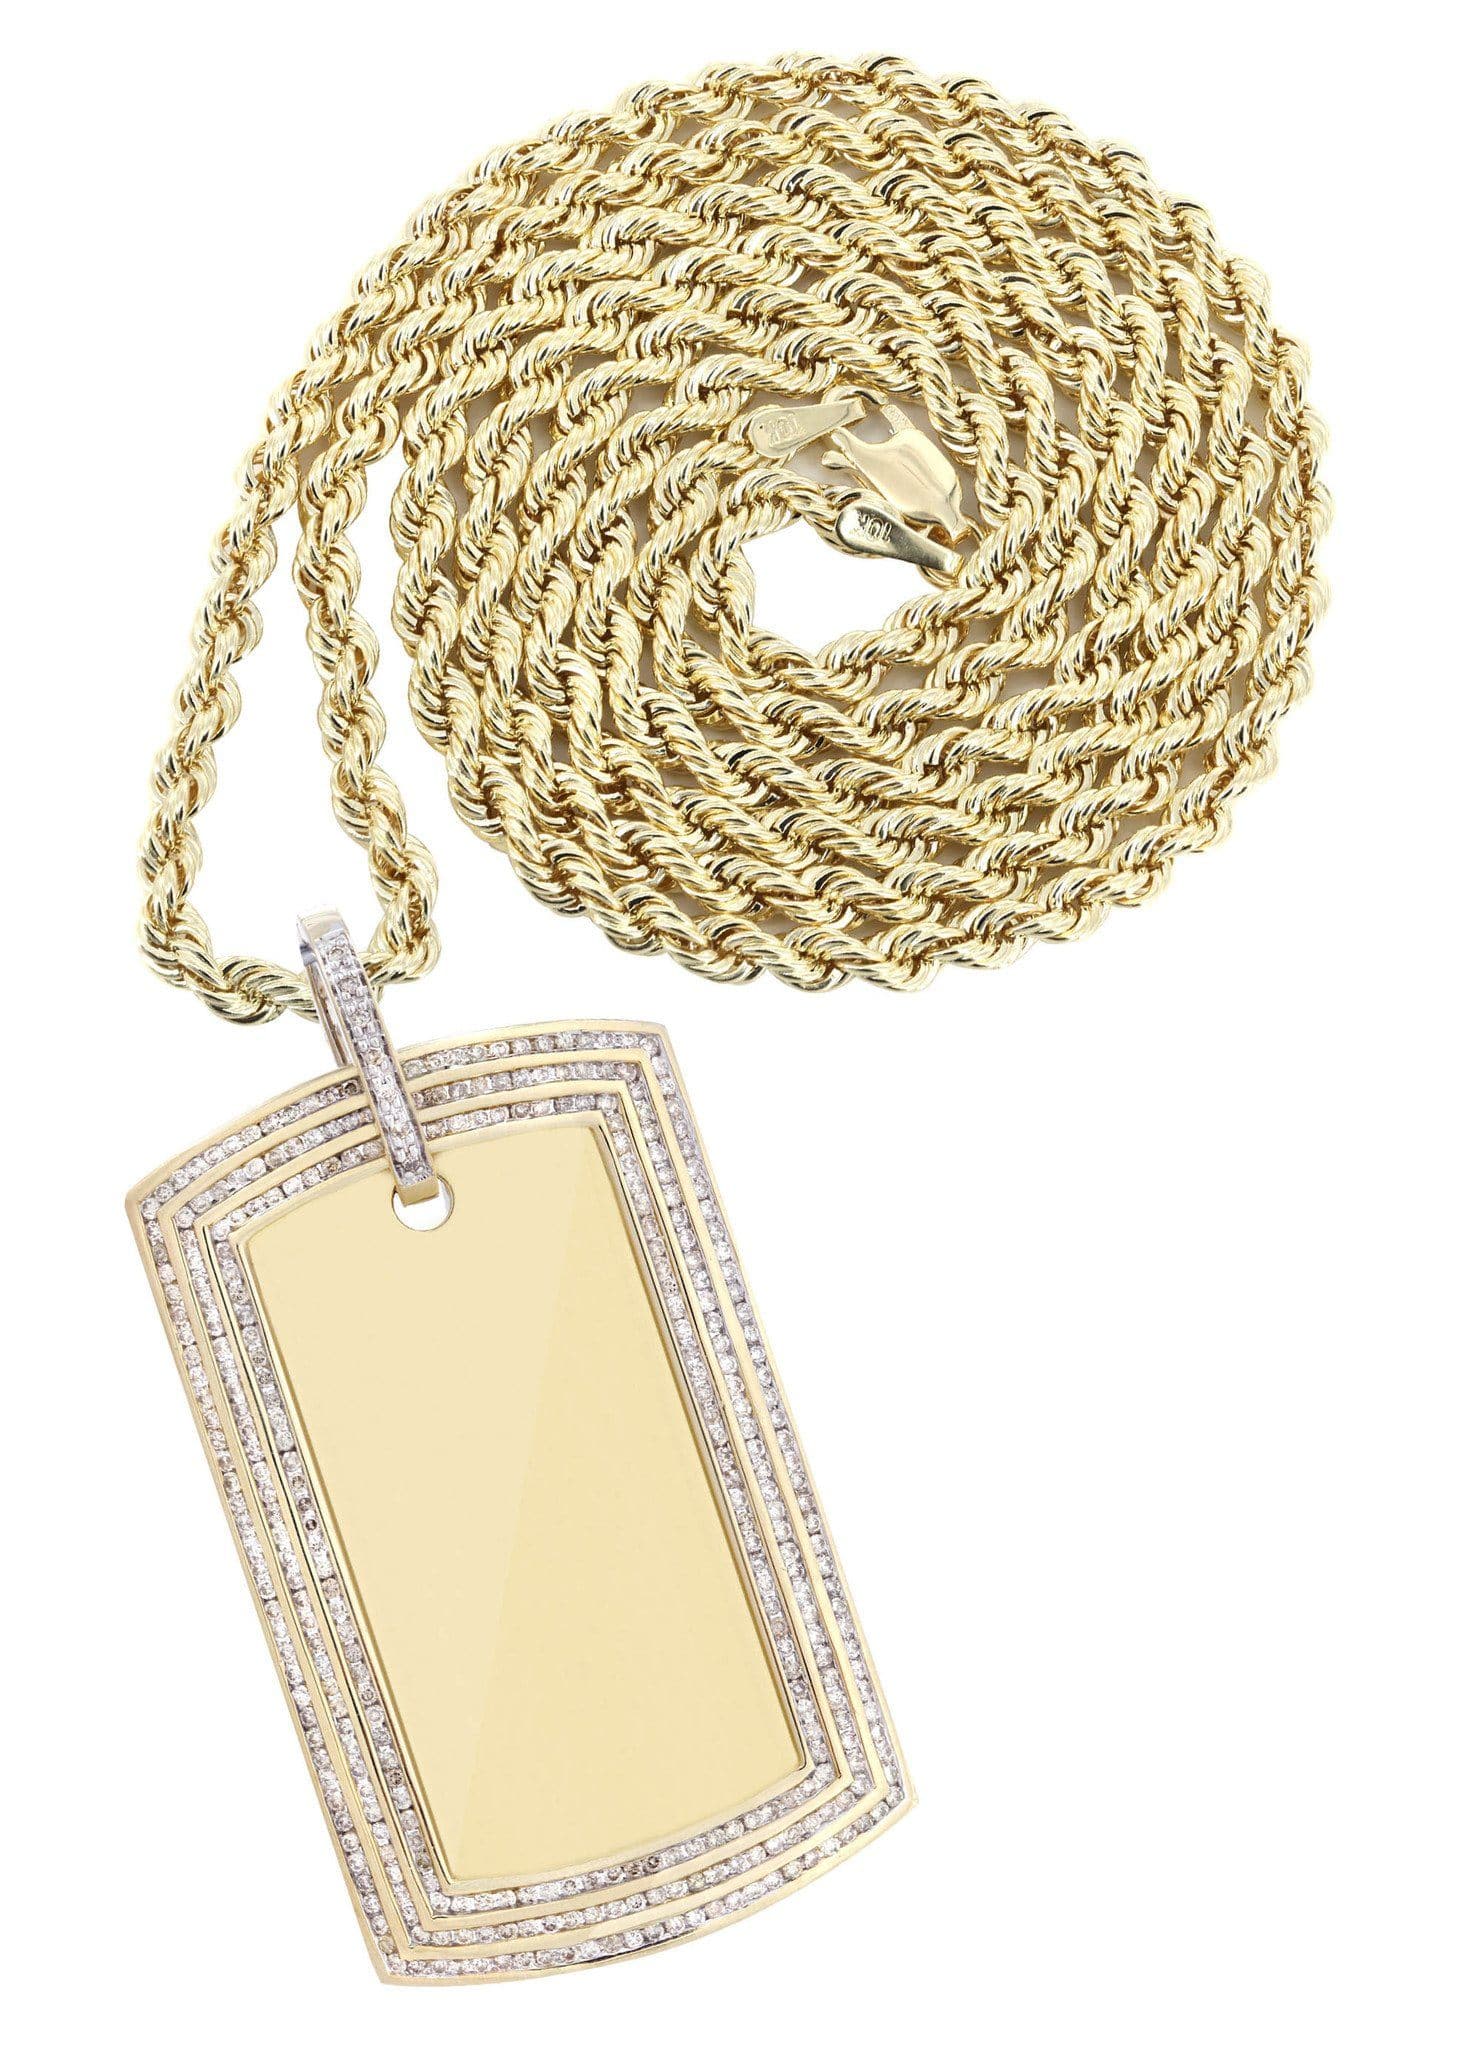 10k gold dog tag necklace